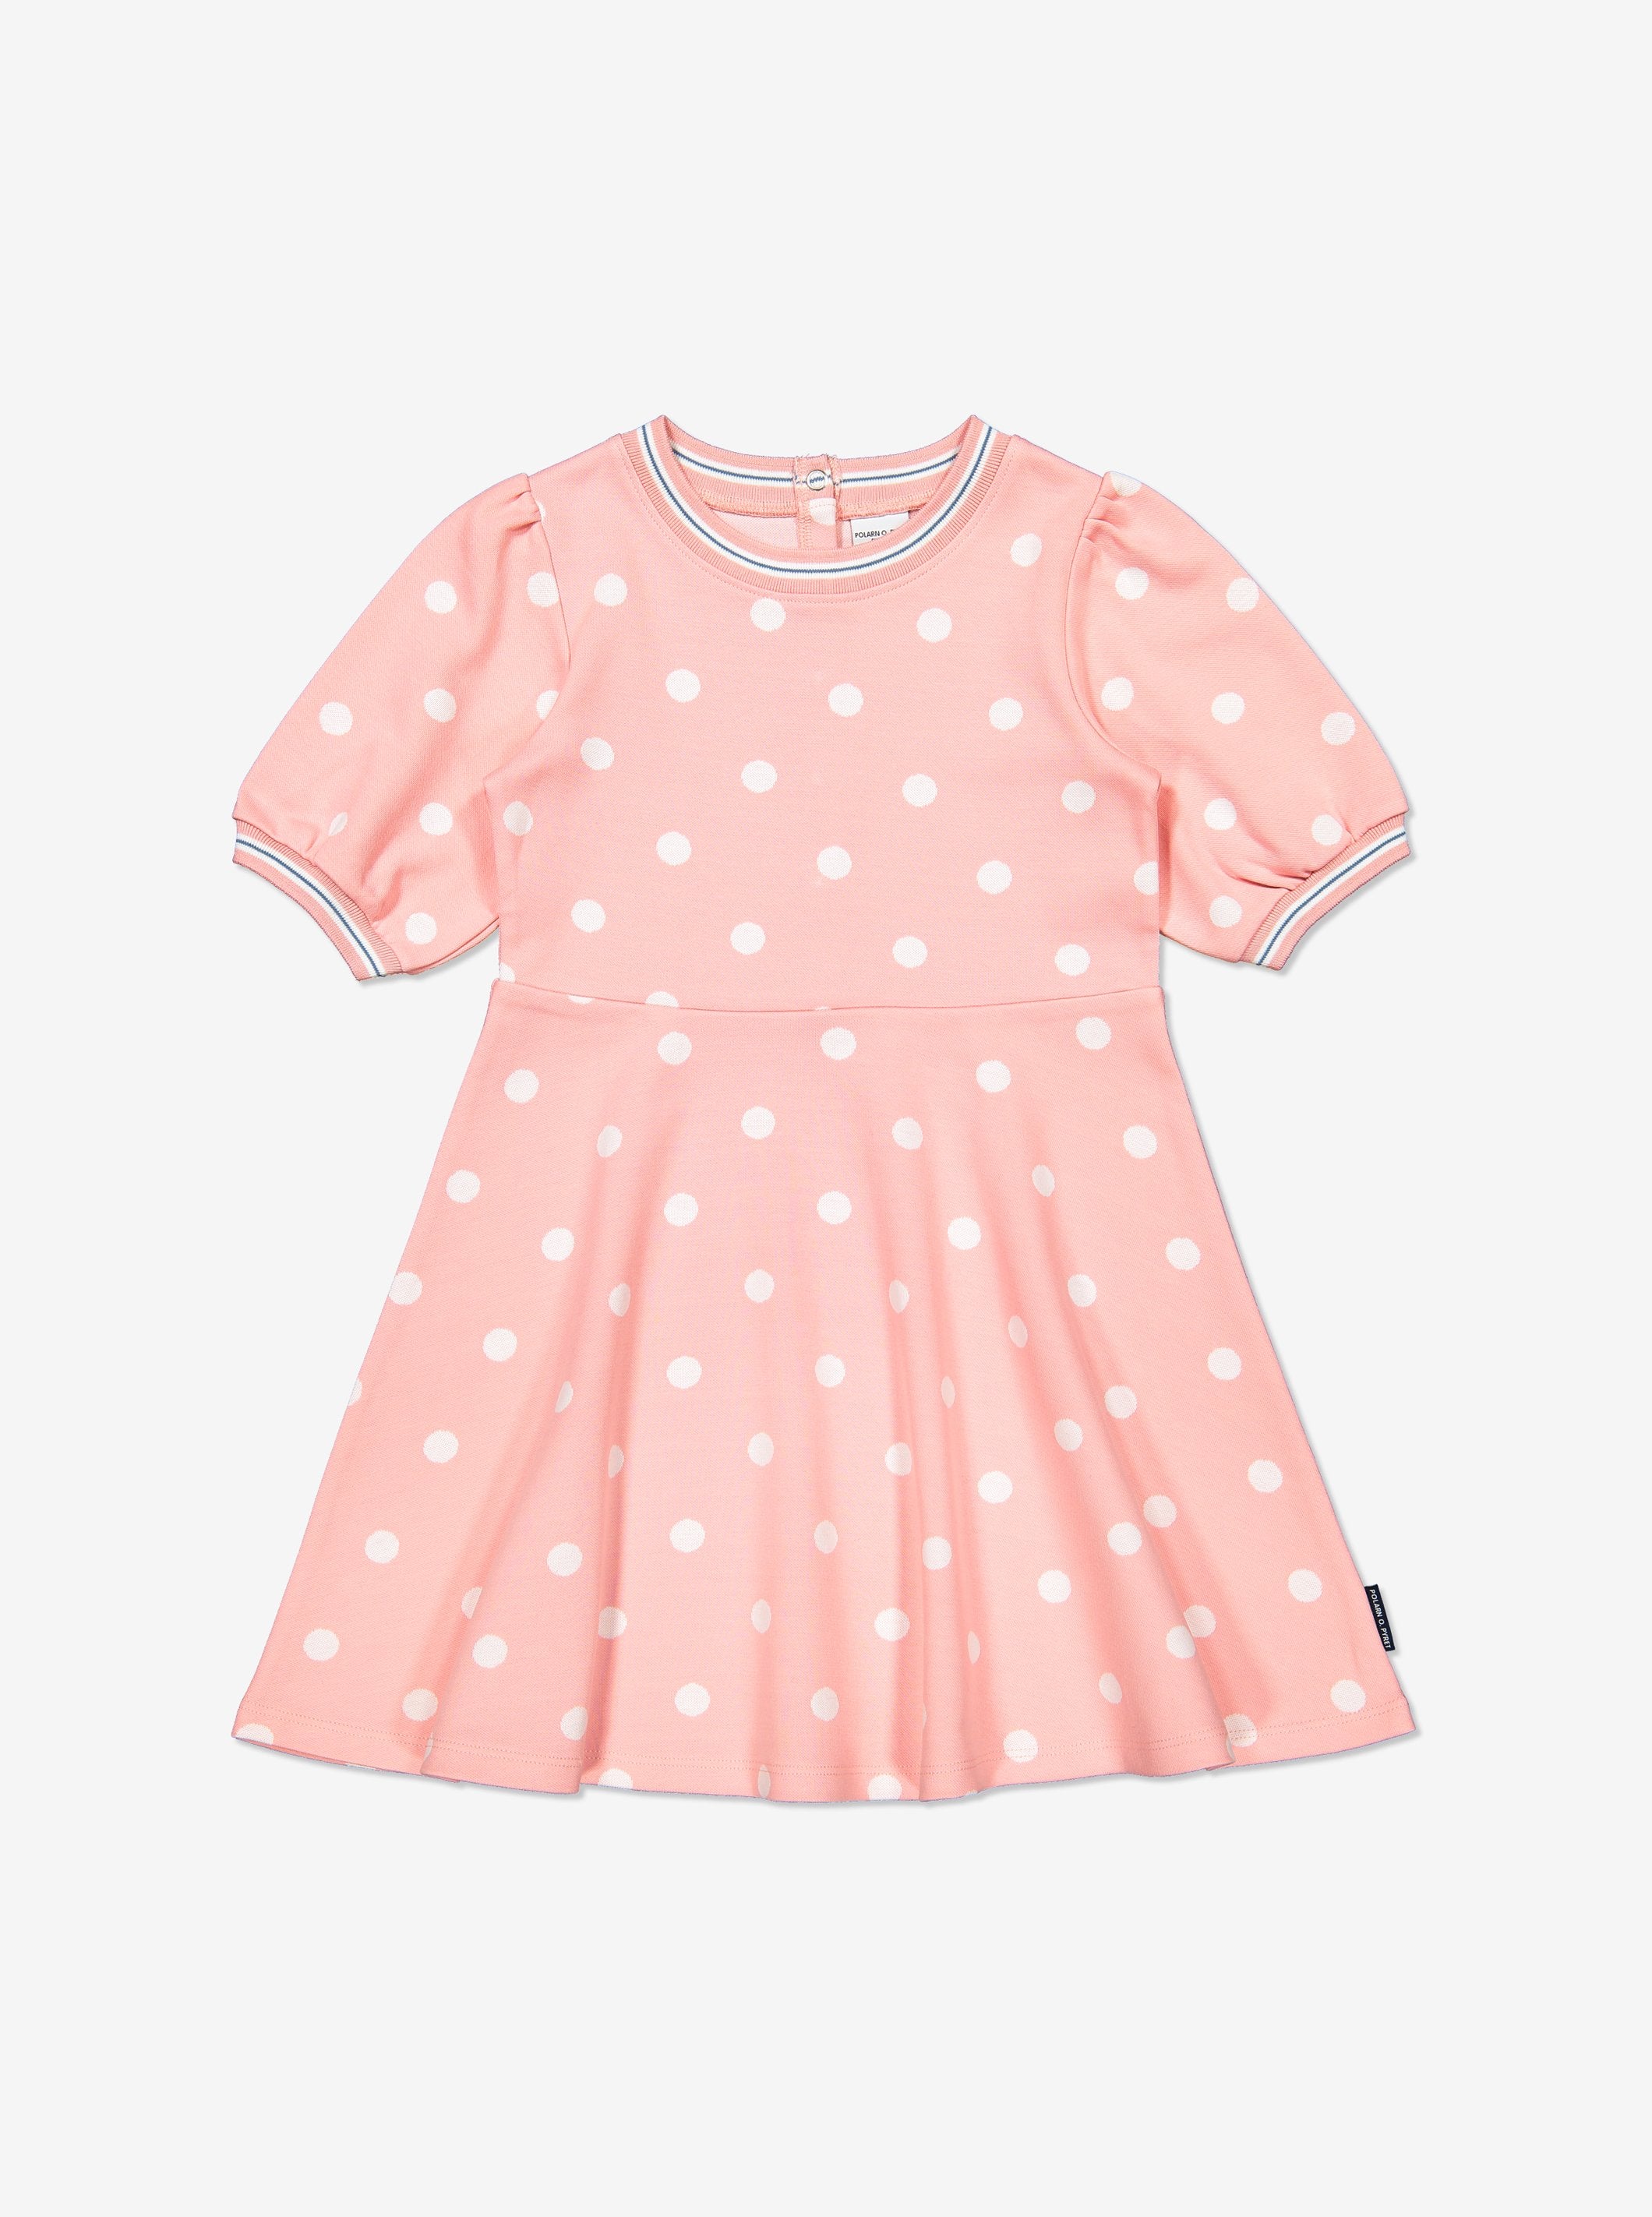 Polka Dot Kids Dress